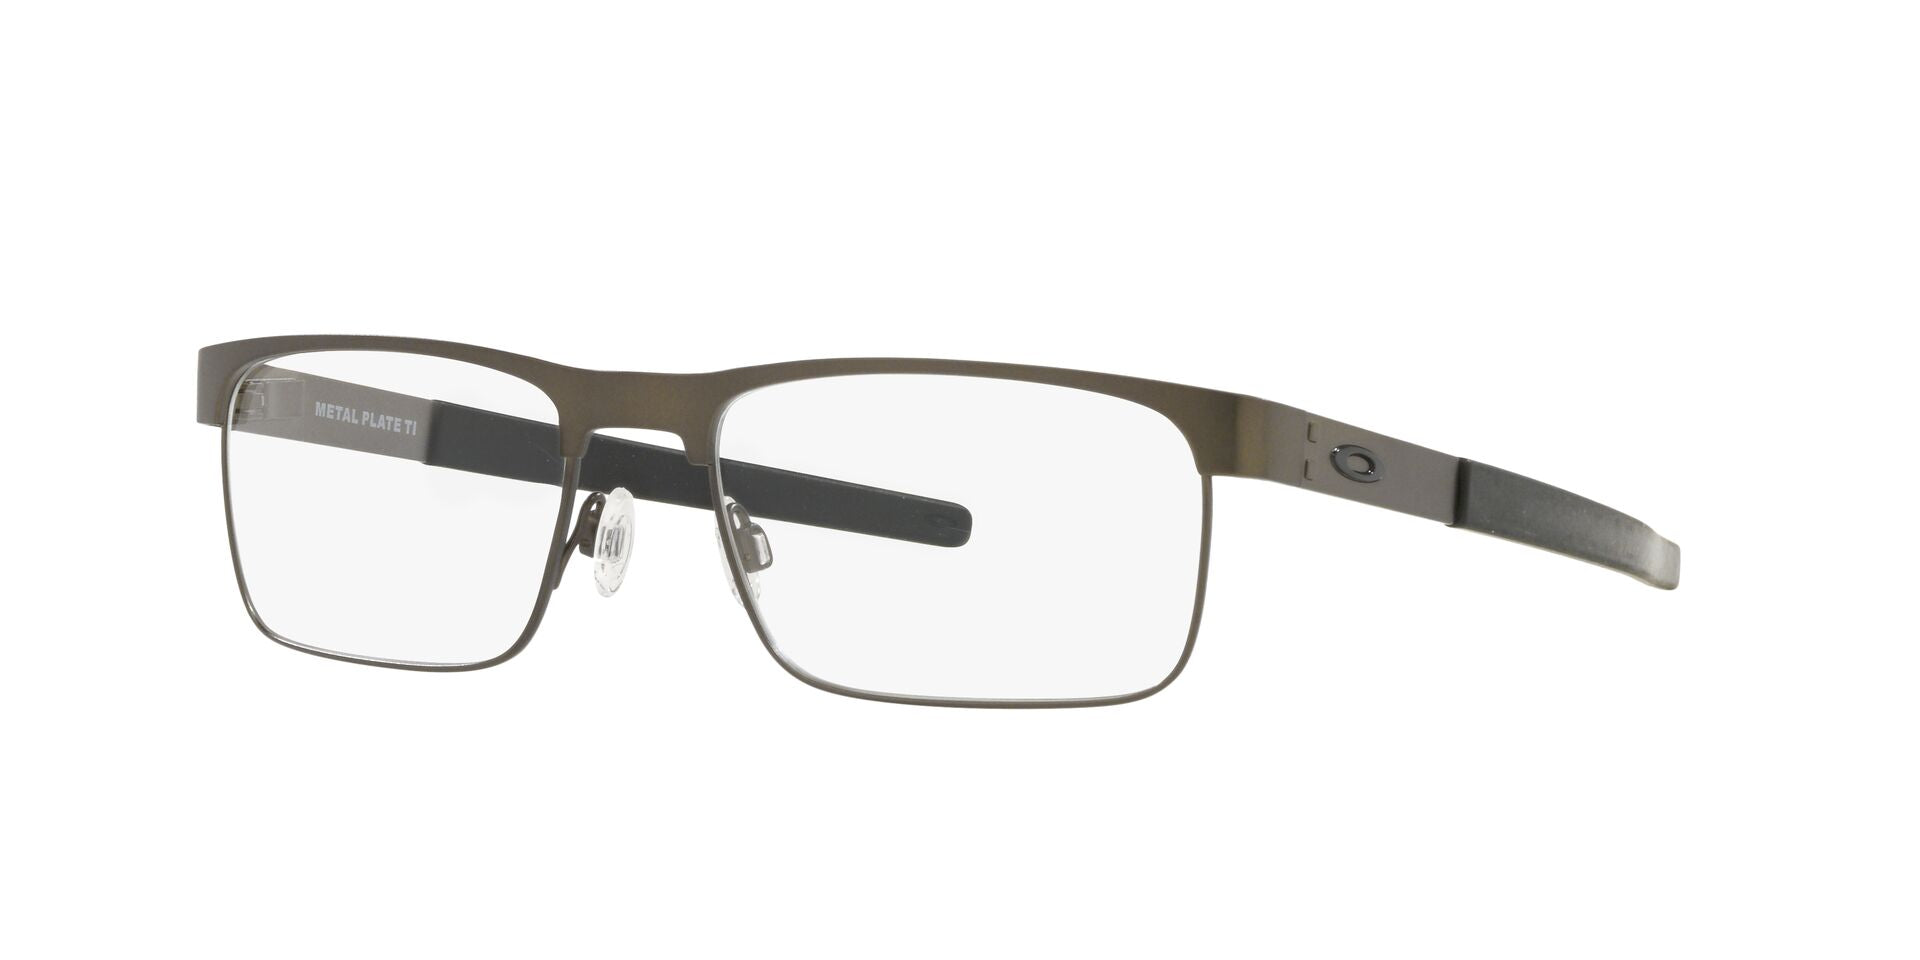 Oakley Metal Plate Ti OX5153 Rectangle Glasses | Fashion Eyewear US